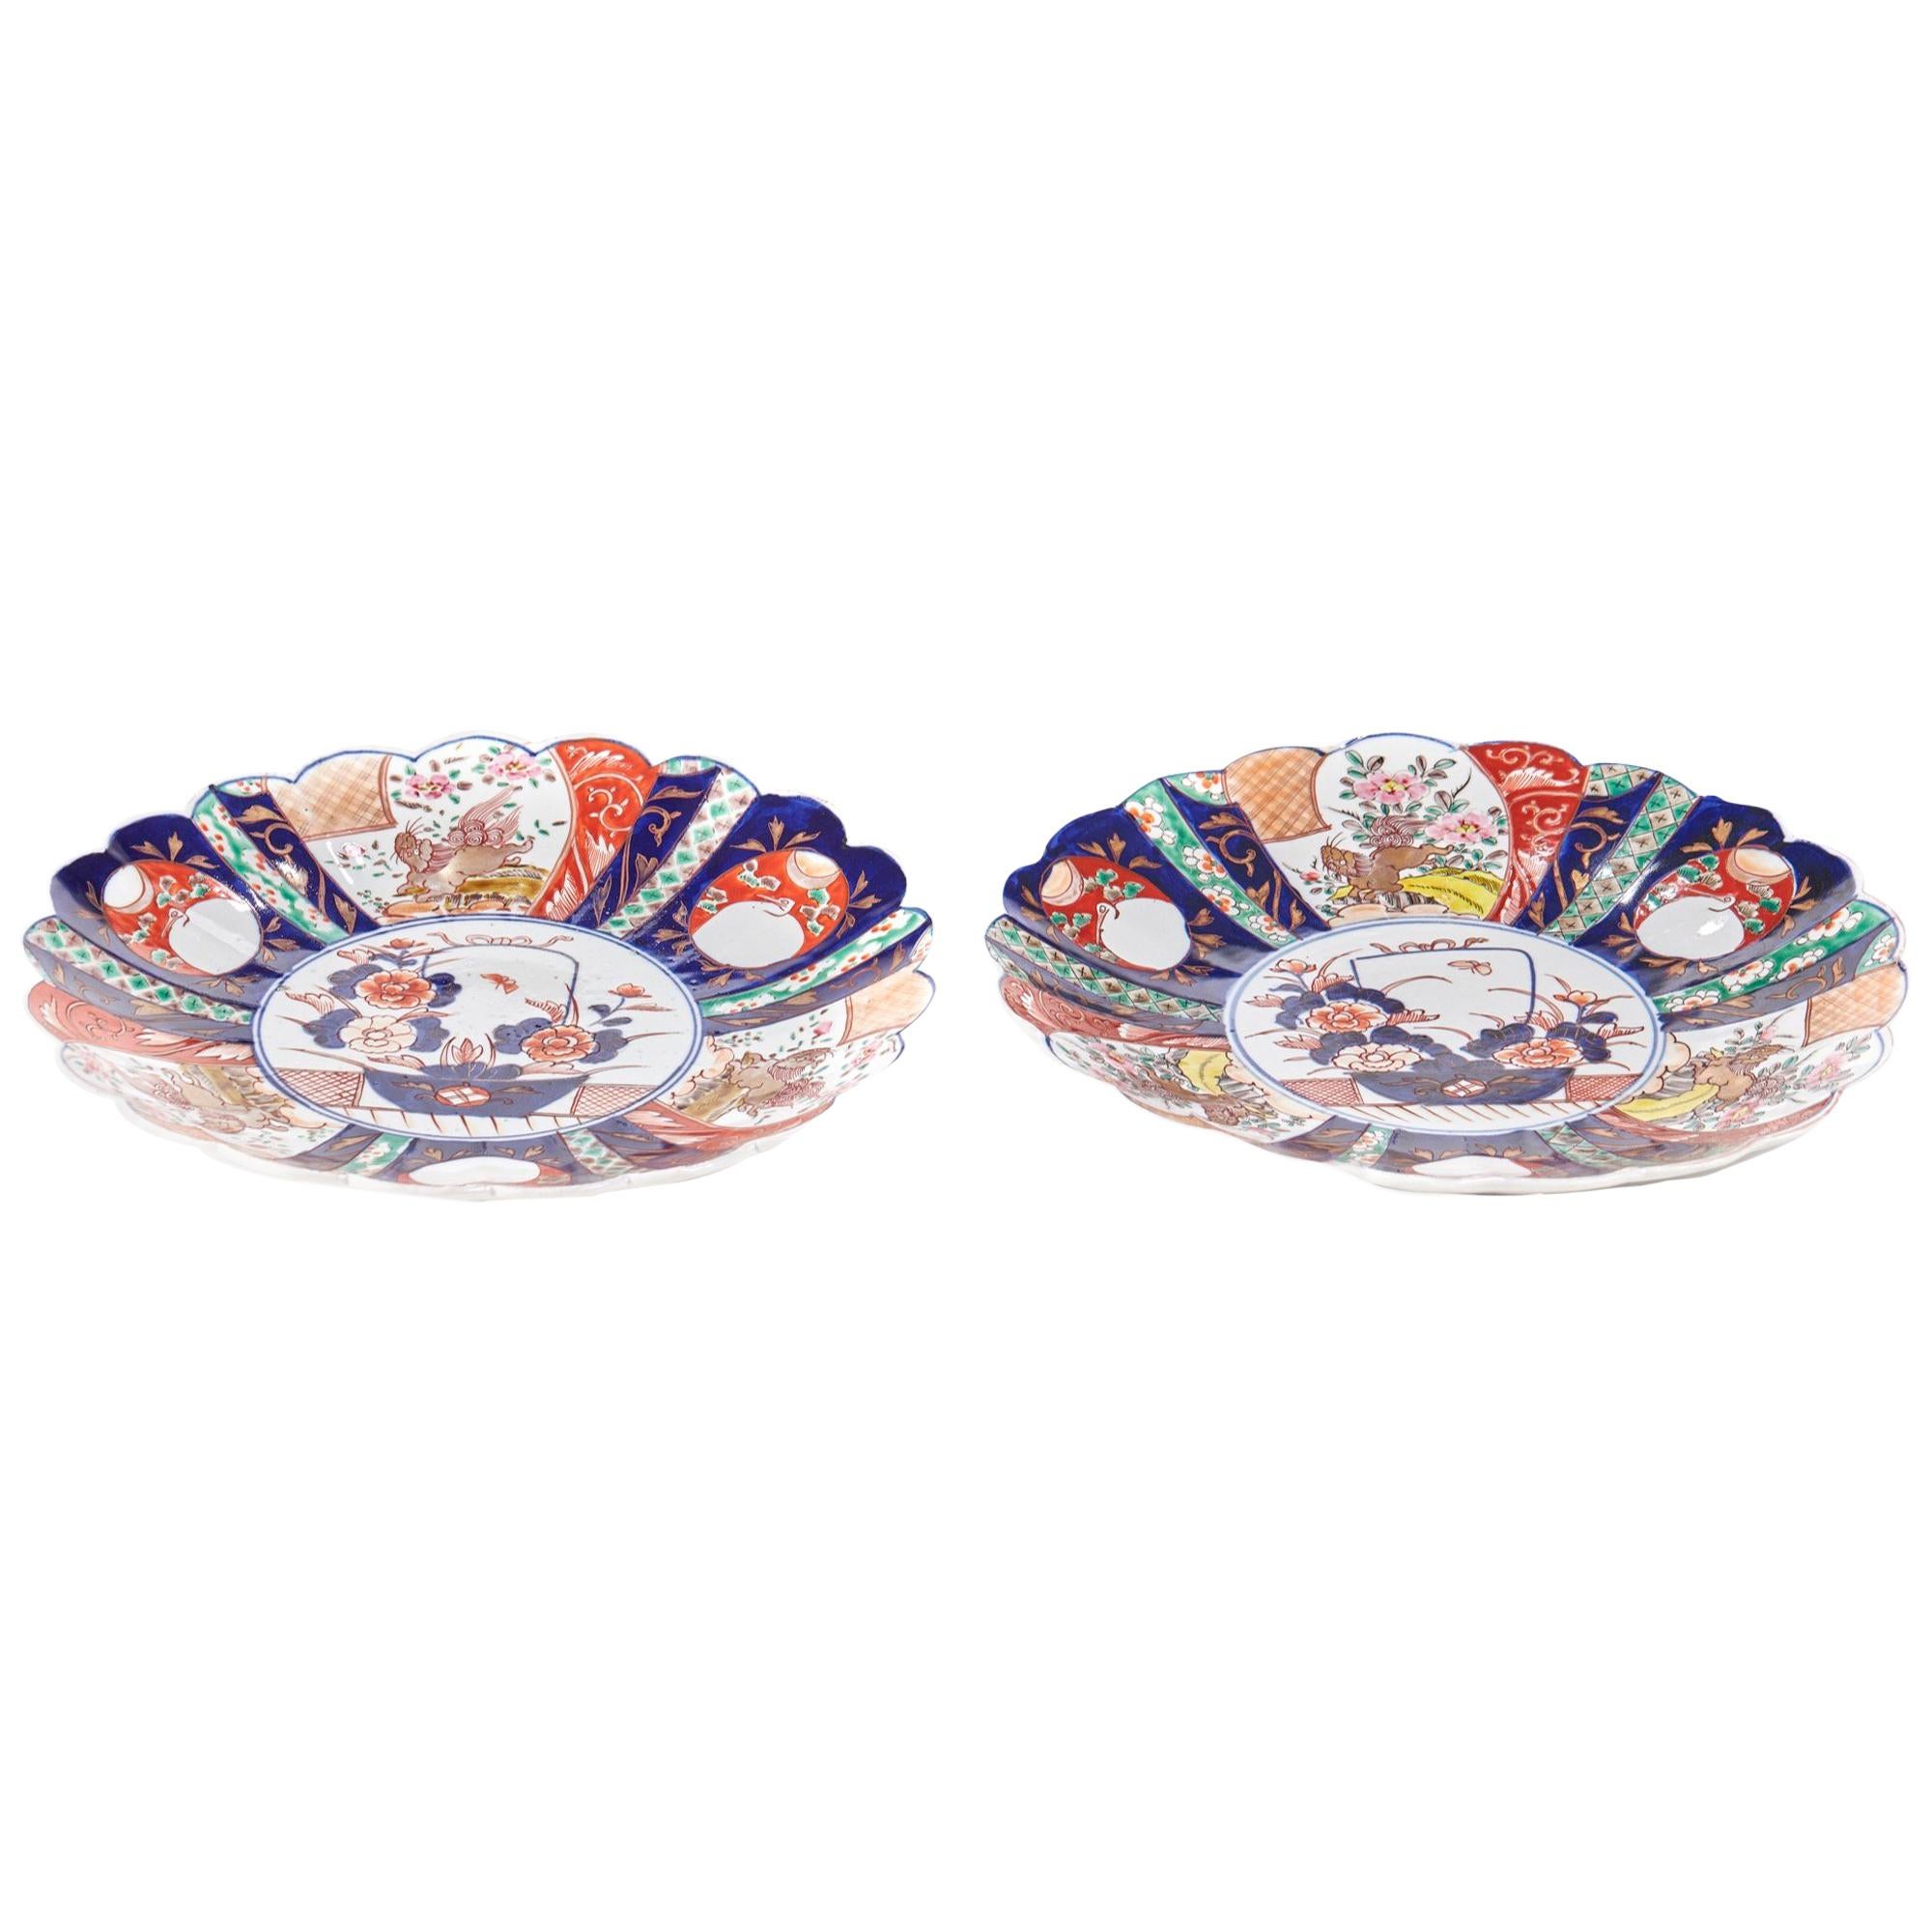 Pair of Antique Scalloped Edge Japanese Imari Porcelain Dishes